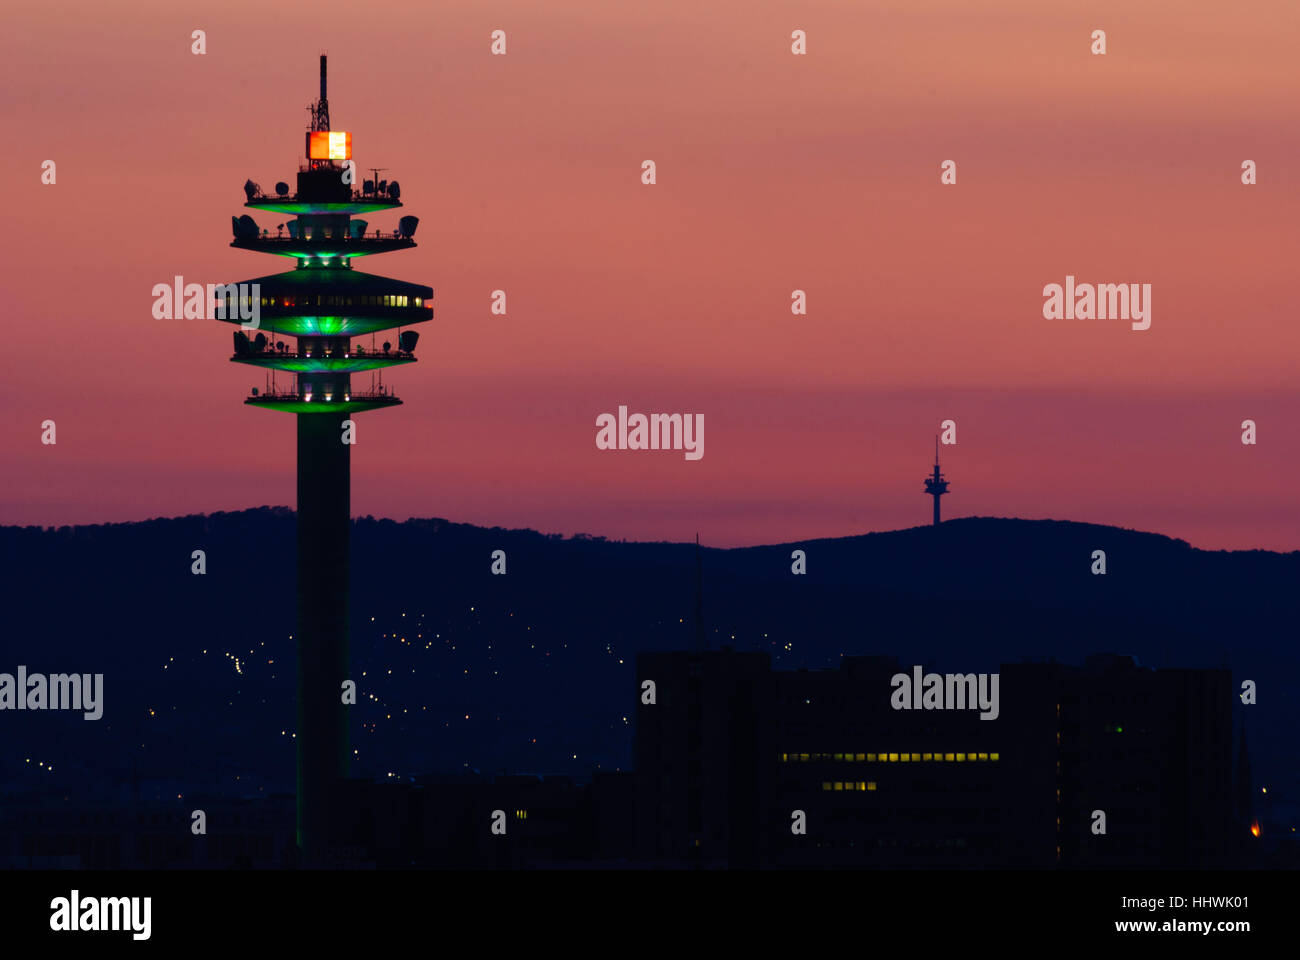 Wien, Vienna: torri di telecomunicazione di Telekom Austria in arsenale e sulla montagna di Exel (destra) 00., Wien, Austria Foto Stock